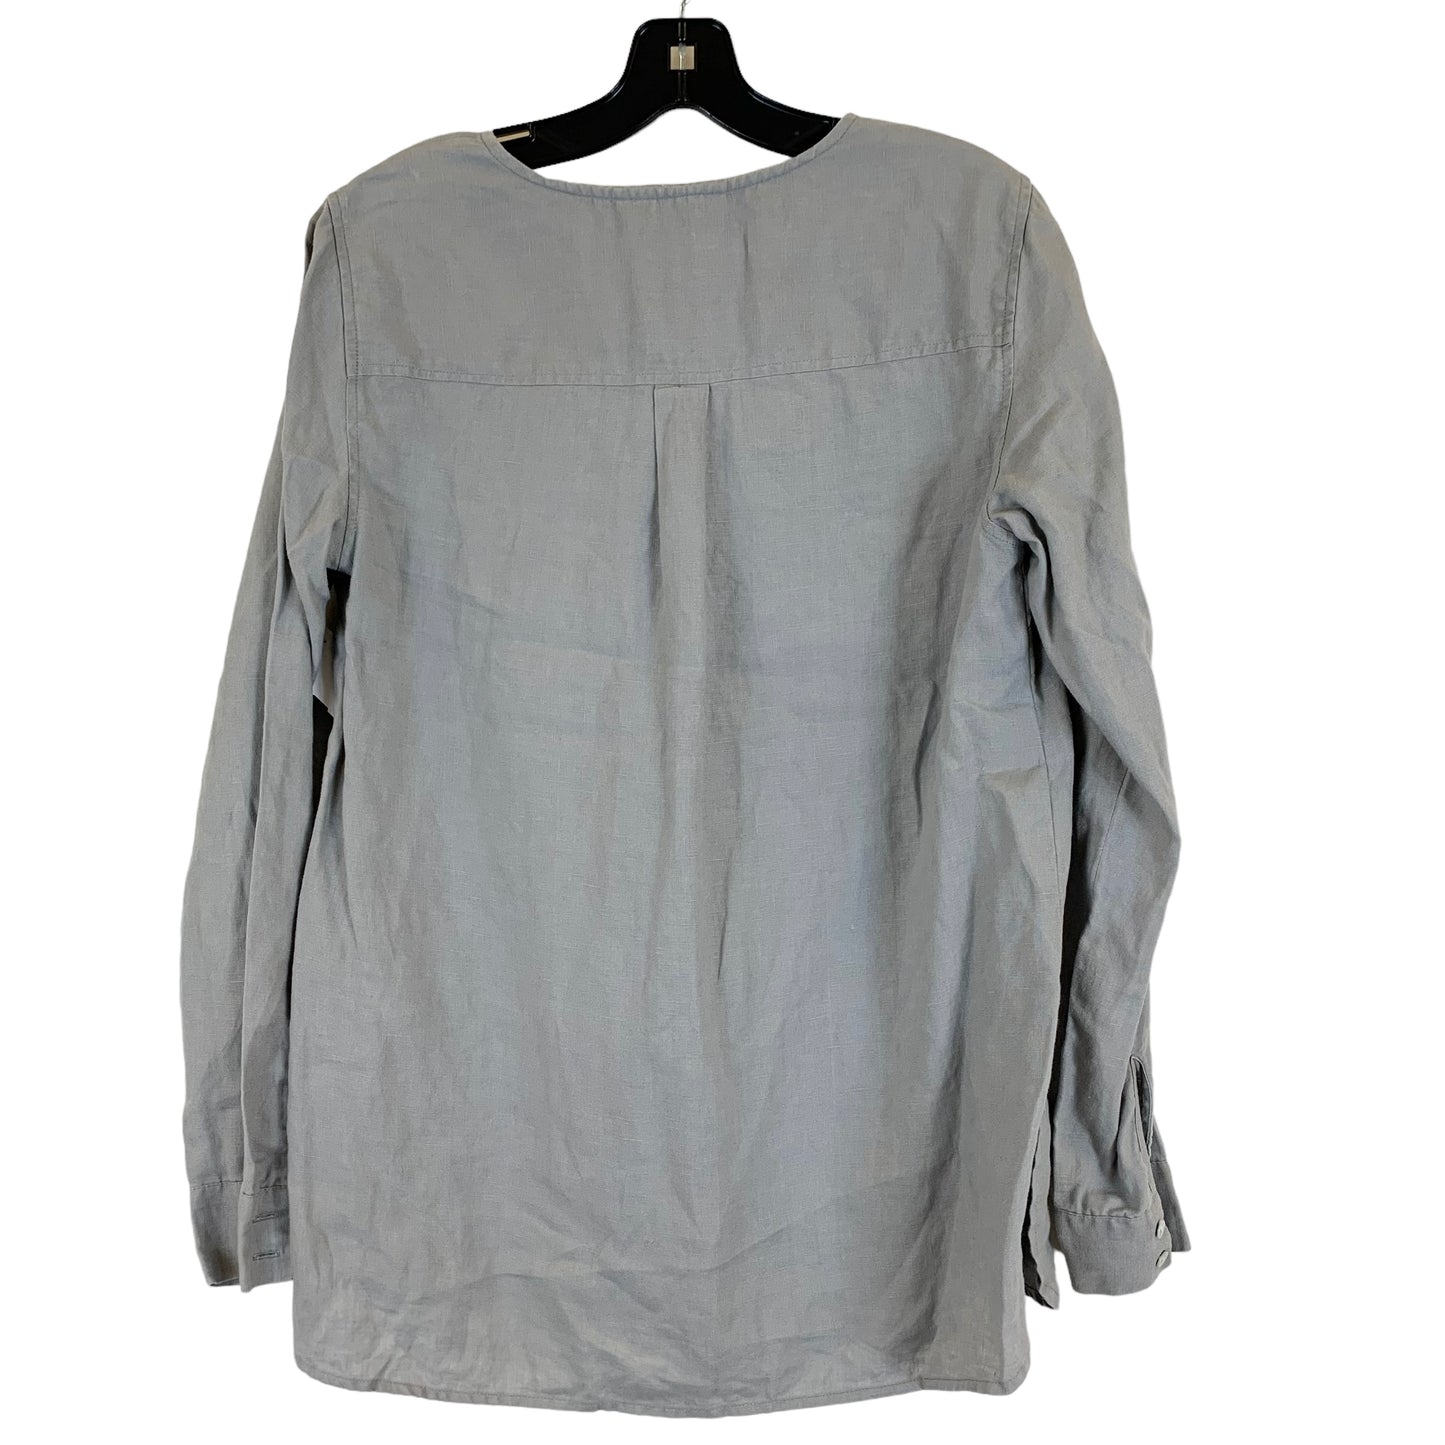 Top Long Sleeve Basic By Jones New York  Size: M